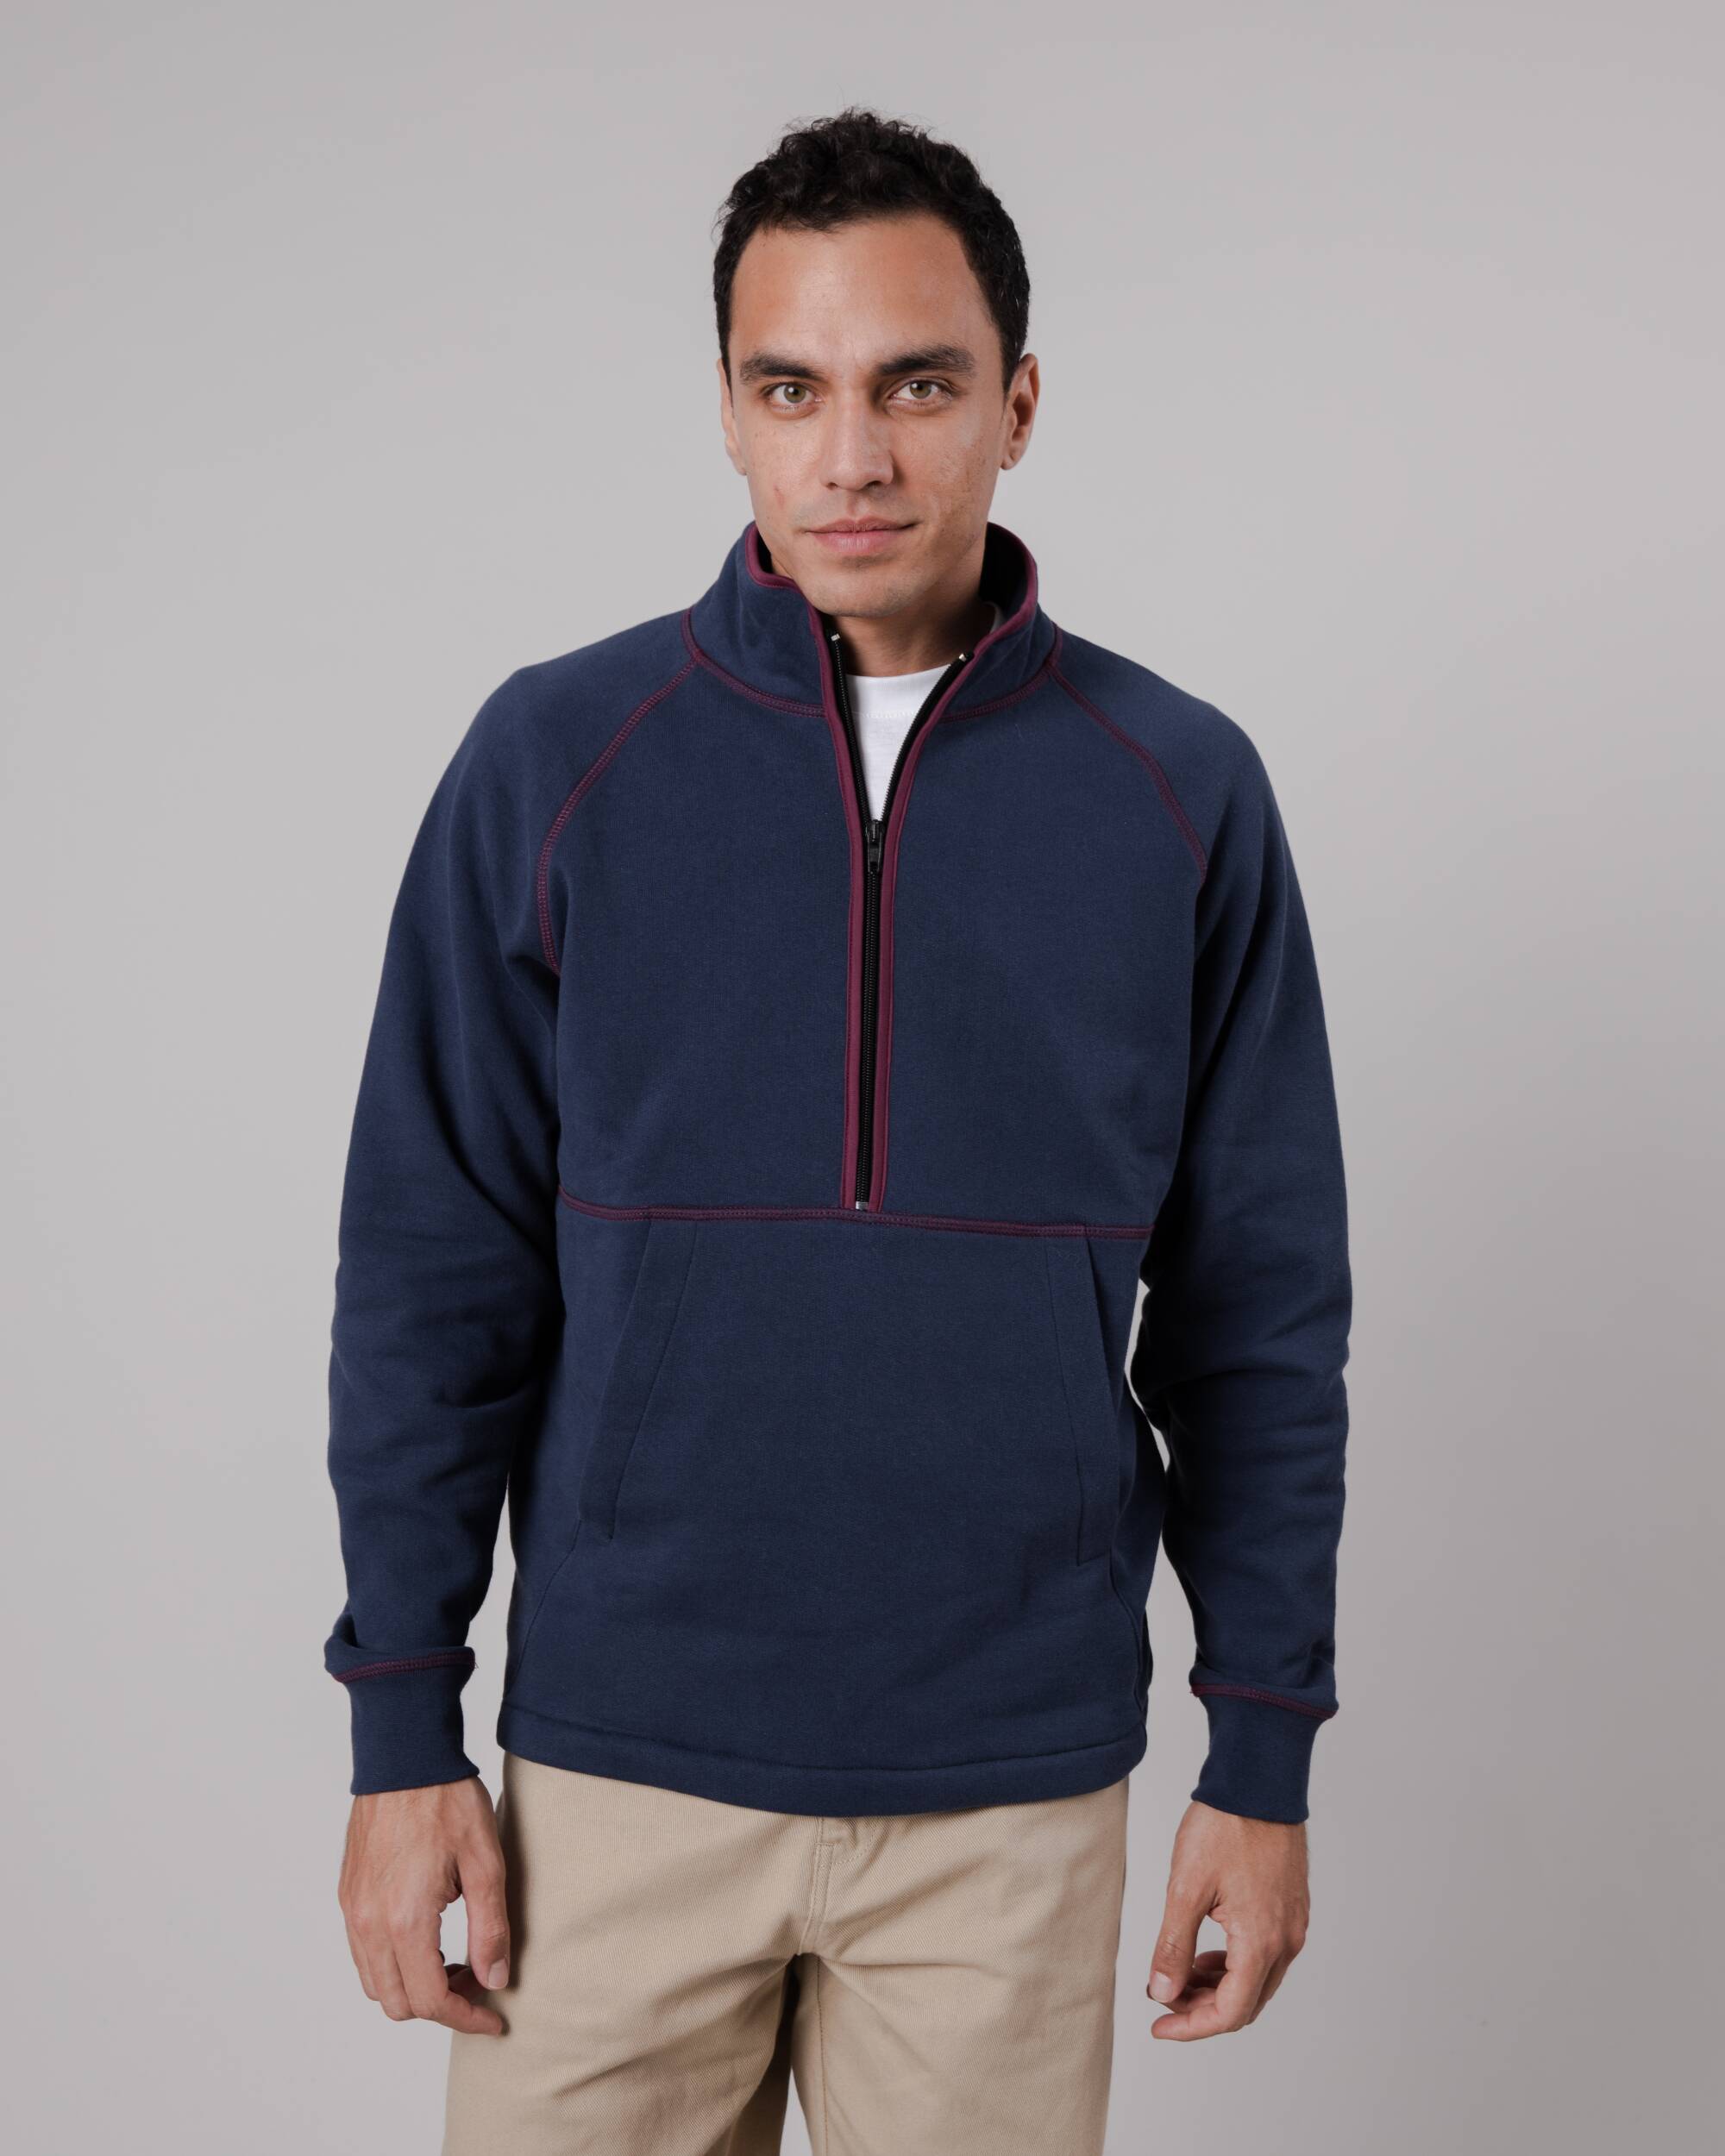 Navy blue organic cotton zip-up sweater from Brava Fabrics